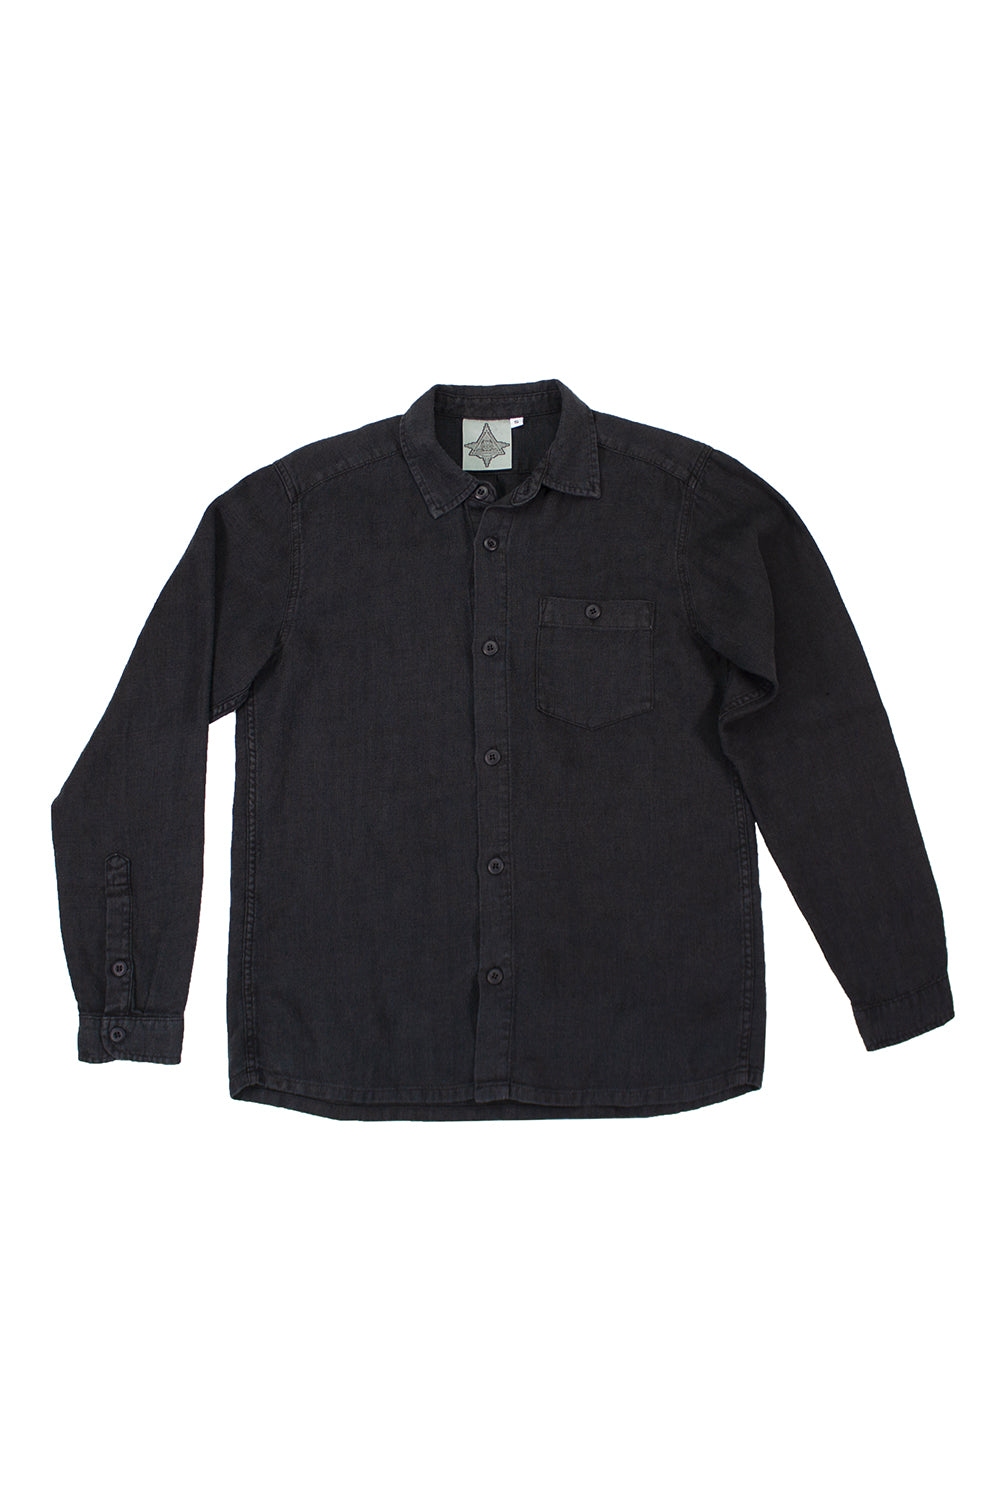 Lassen 100% Hemp Shirt | Jungmaven Hemp Clothing & Accessories / Color: Black